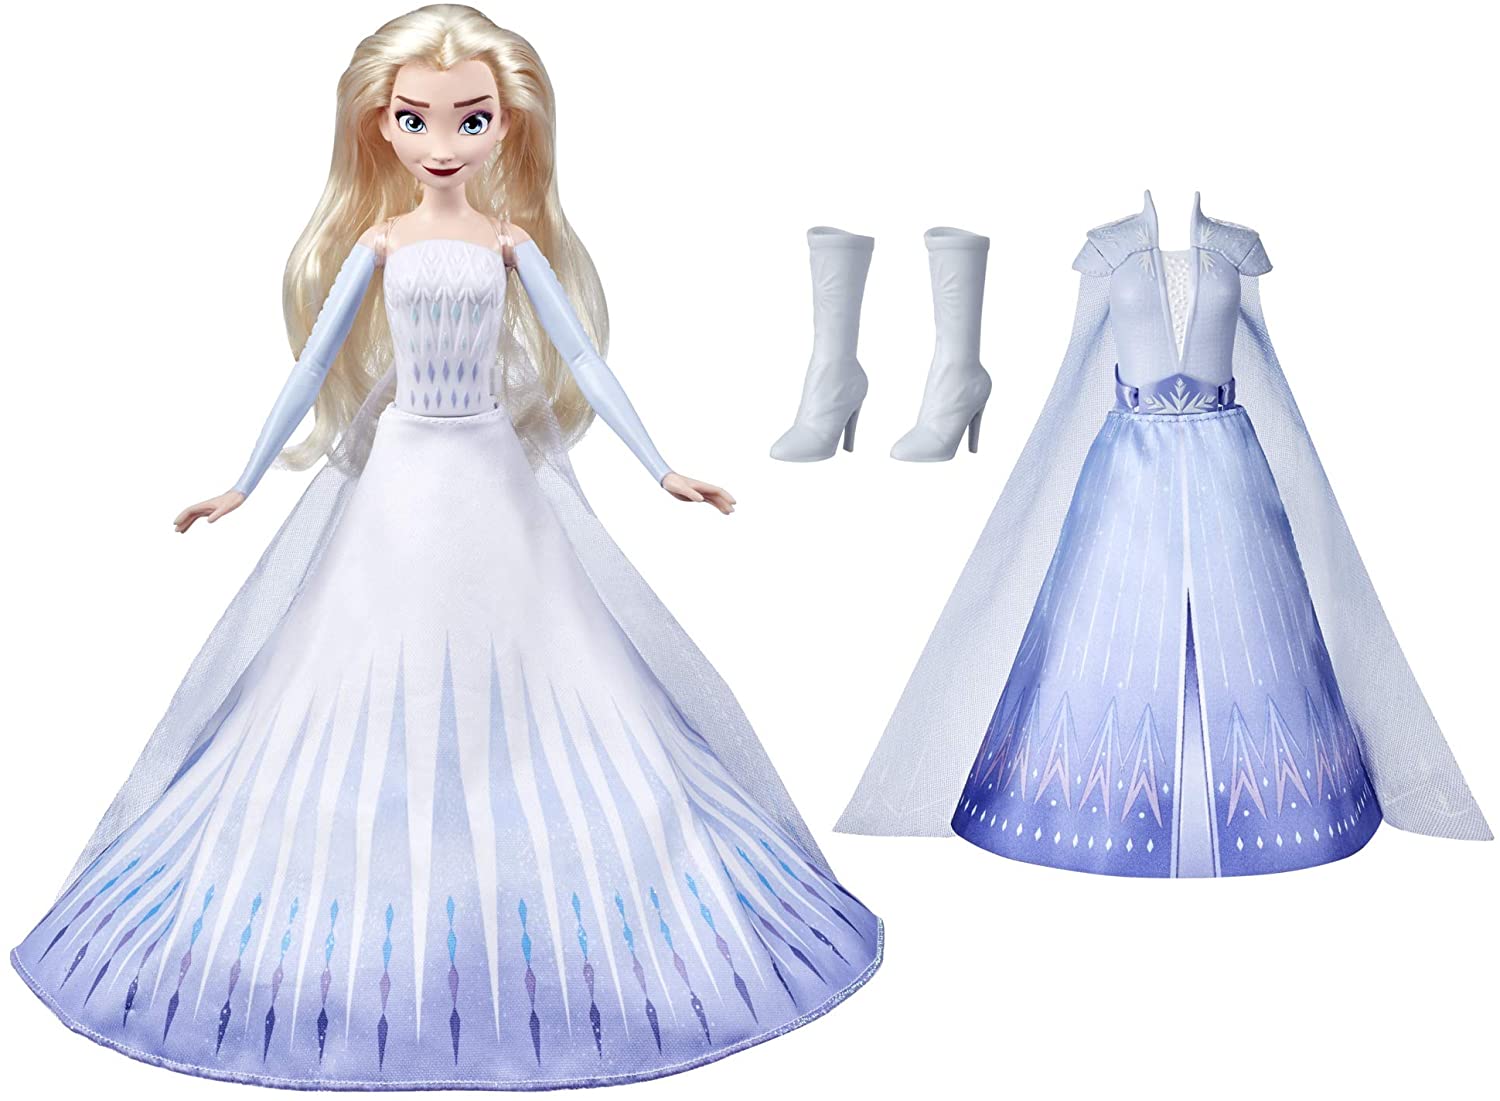 Disney's Frozen 2 Elsa's Transformation Fashion Doll $15 + Free Shipping w/ Amazon Prime or Orders $25+